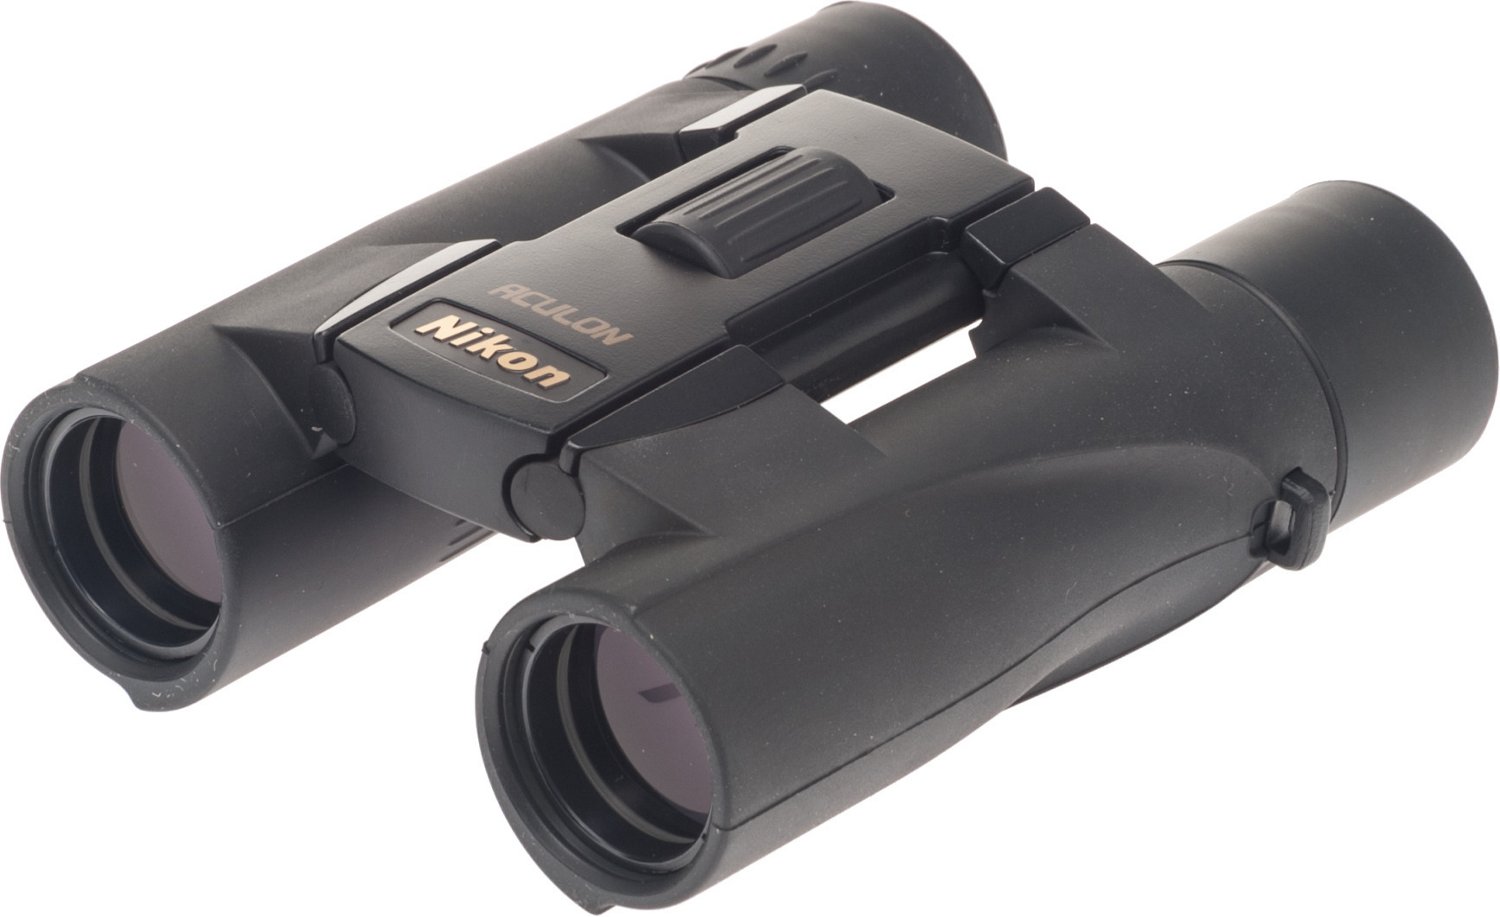 Nikon Aculon A30 10 x 25 Binoculars | Free Shipping at Academy